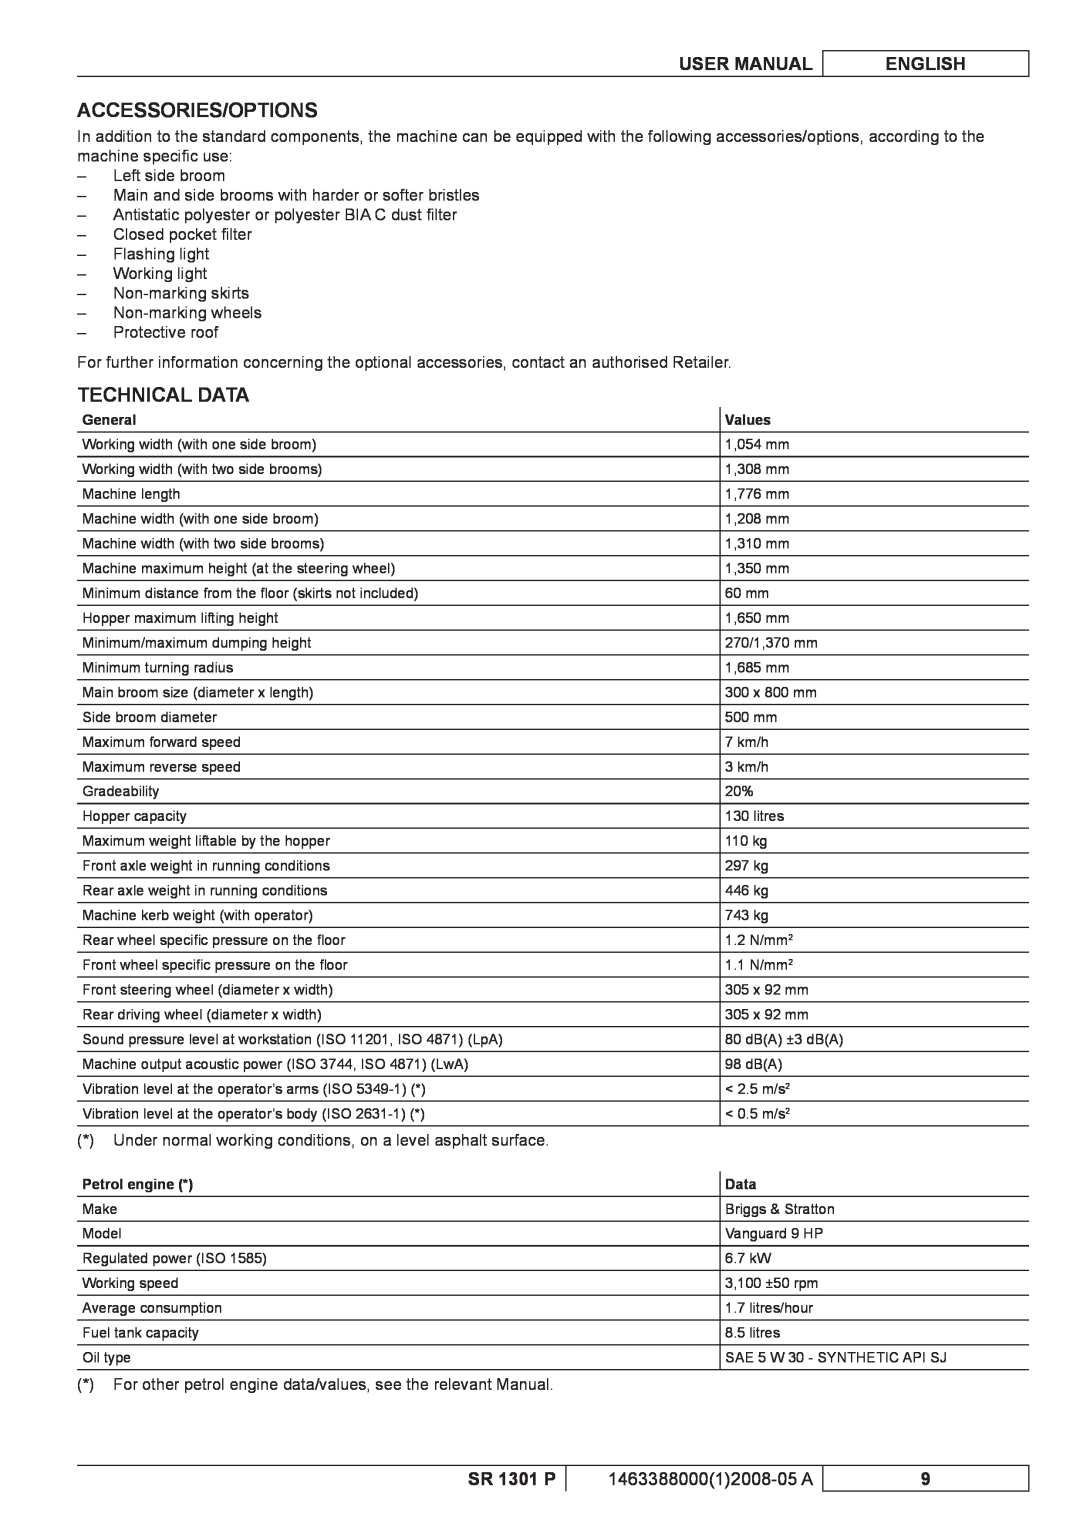 Nilfisk-ALTO SR 1301 P manuel dutilisation Accessories/Options, Technical Data, User Manual, English, 146338800012008-05 A 